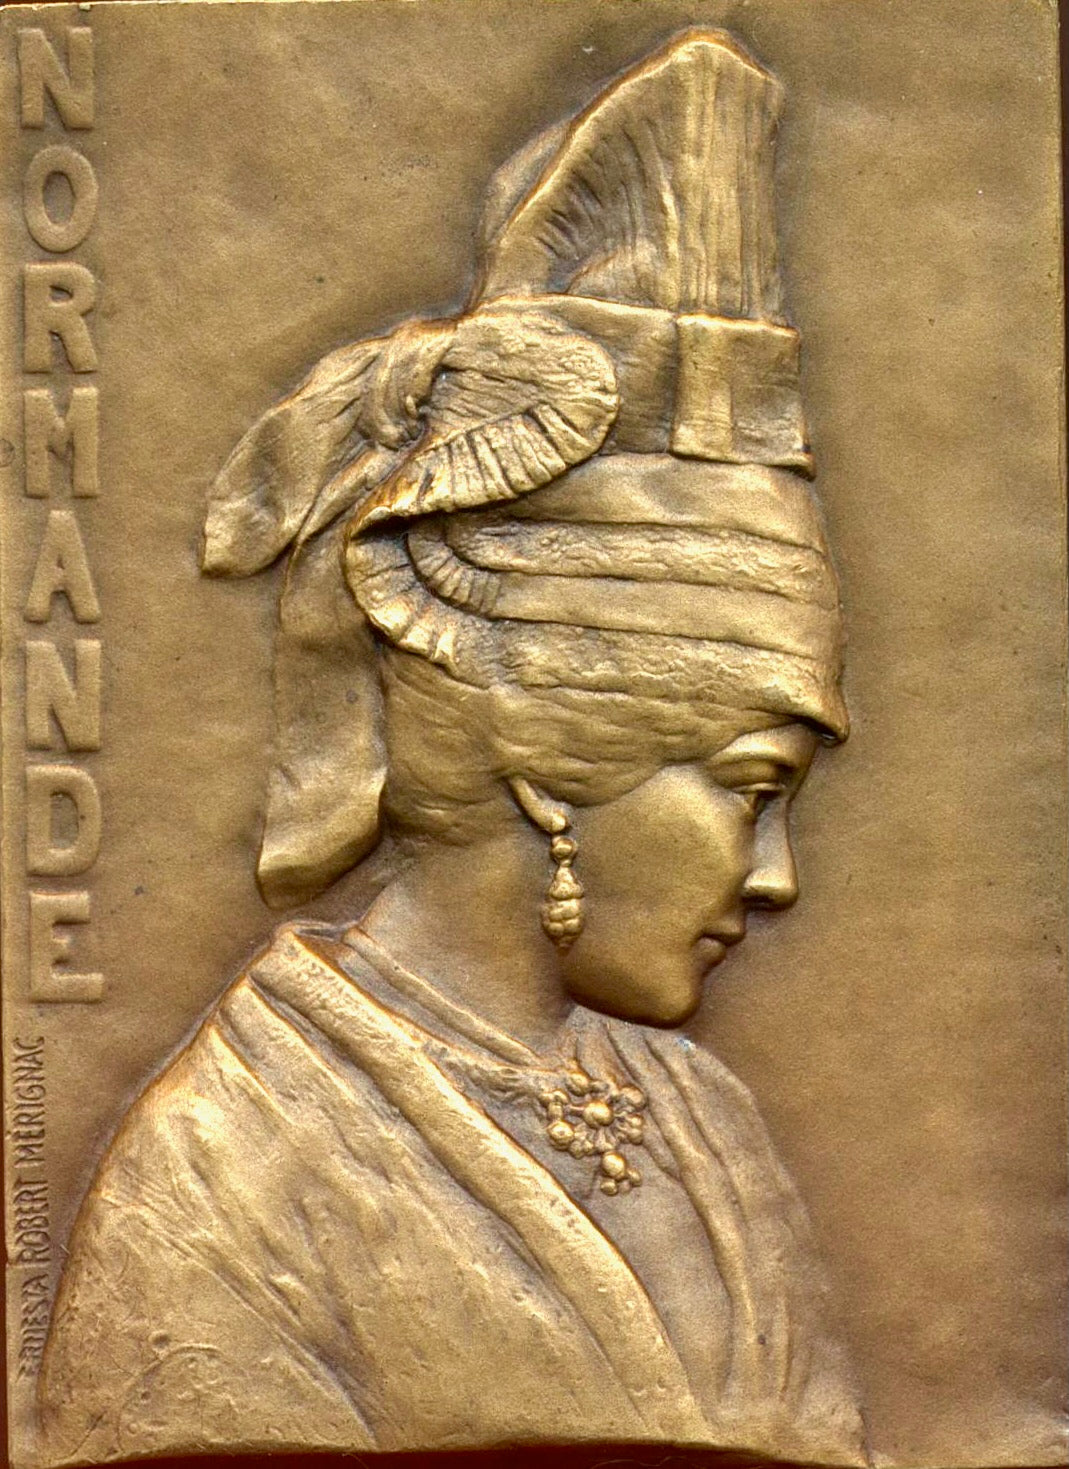 1930 FRANCE Normandie regional dress bronze plaque 61mm*48mm